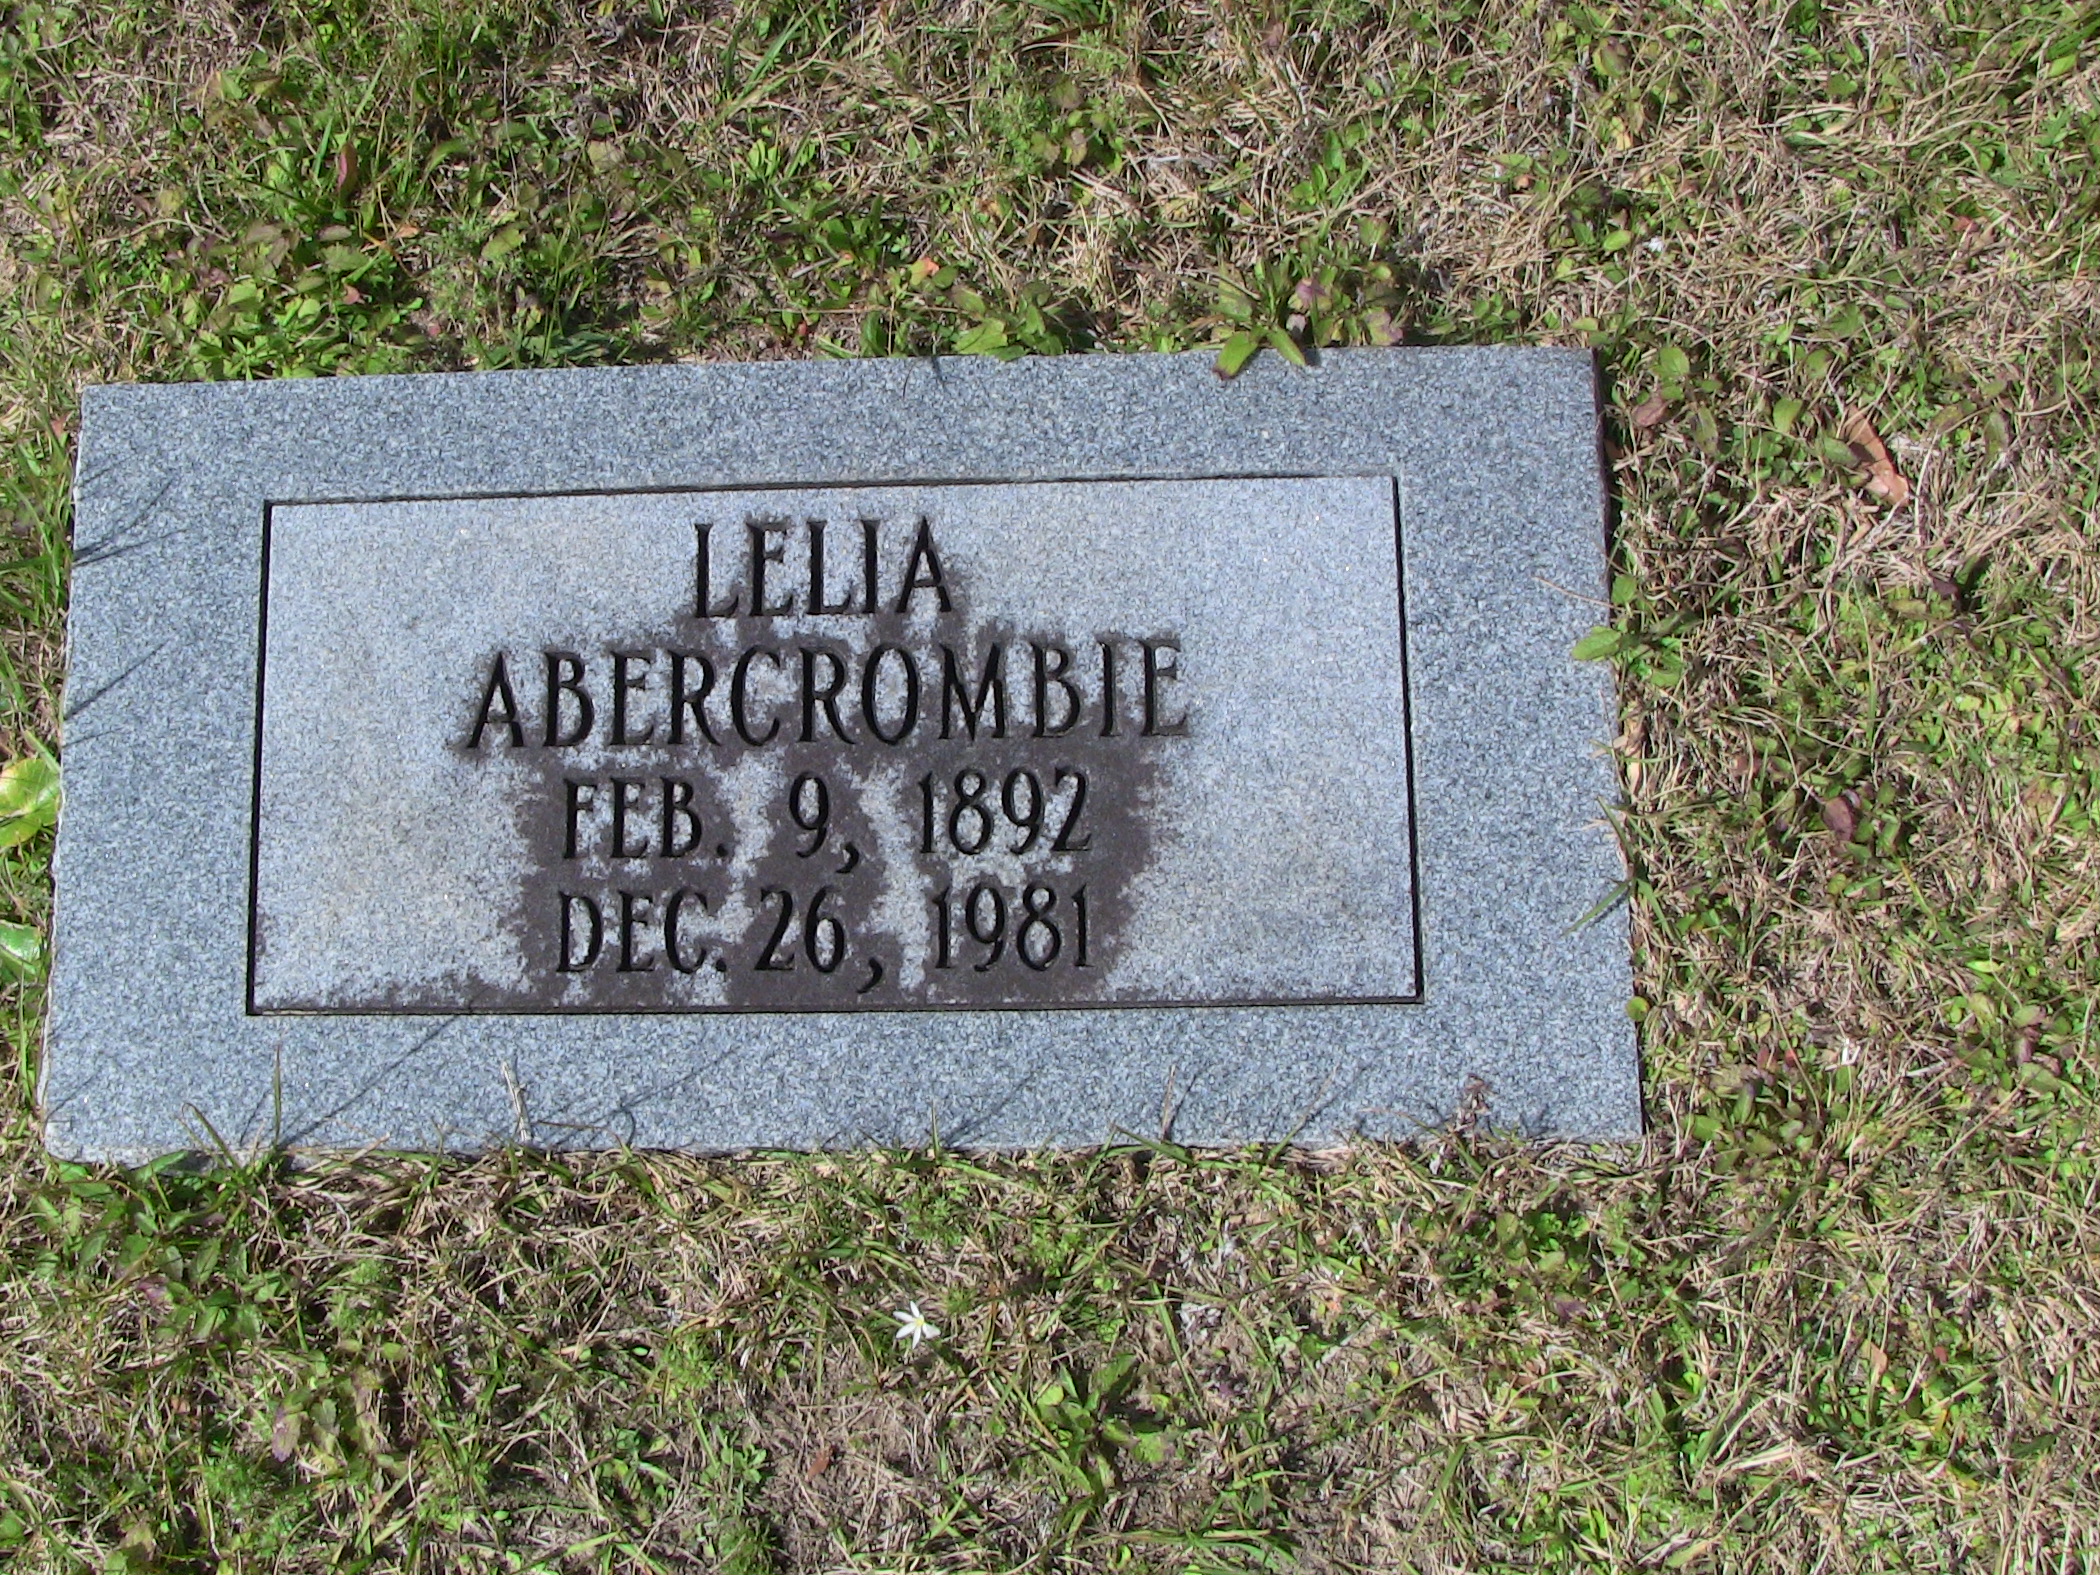 Lelia Abercrombie